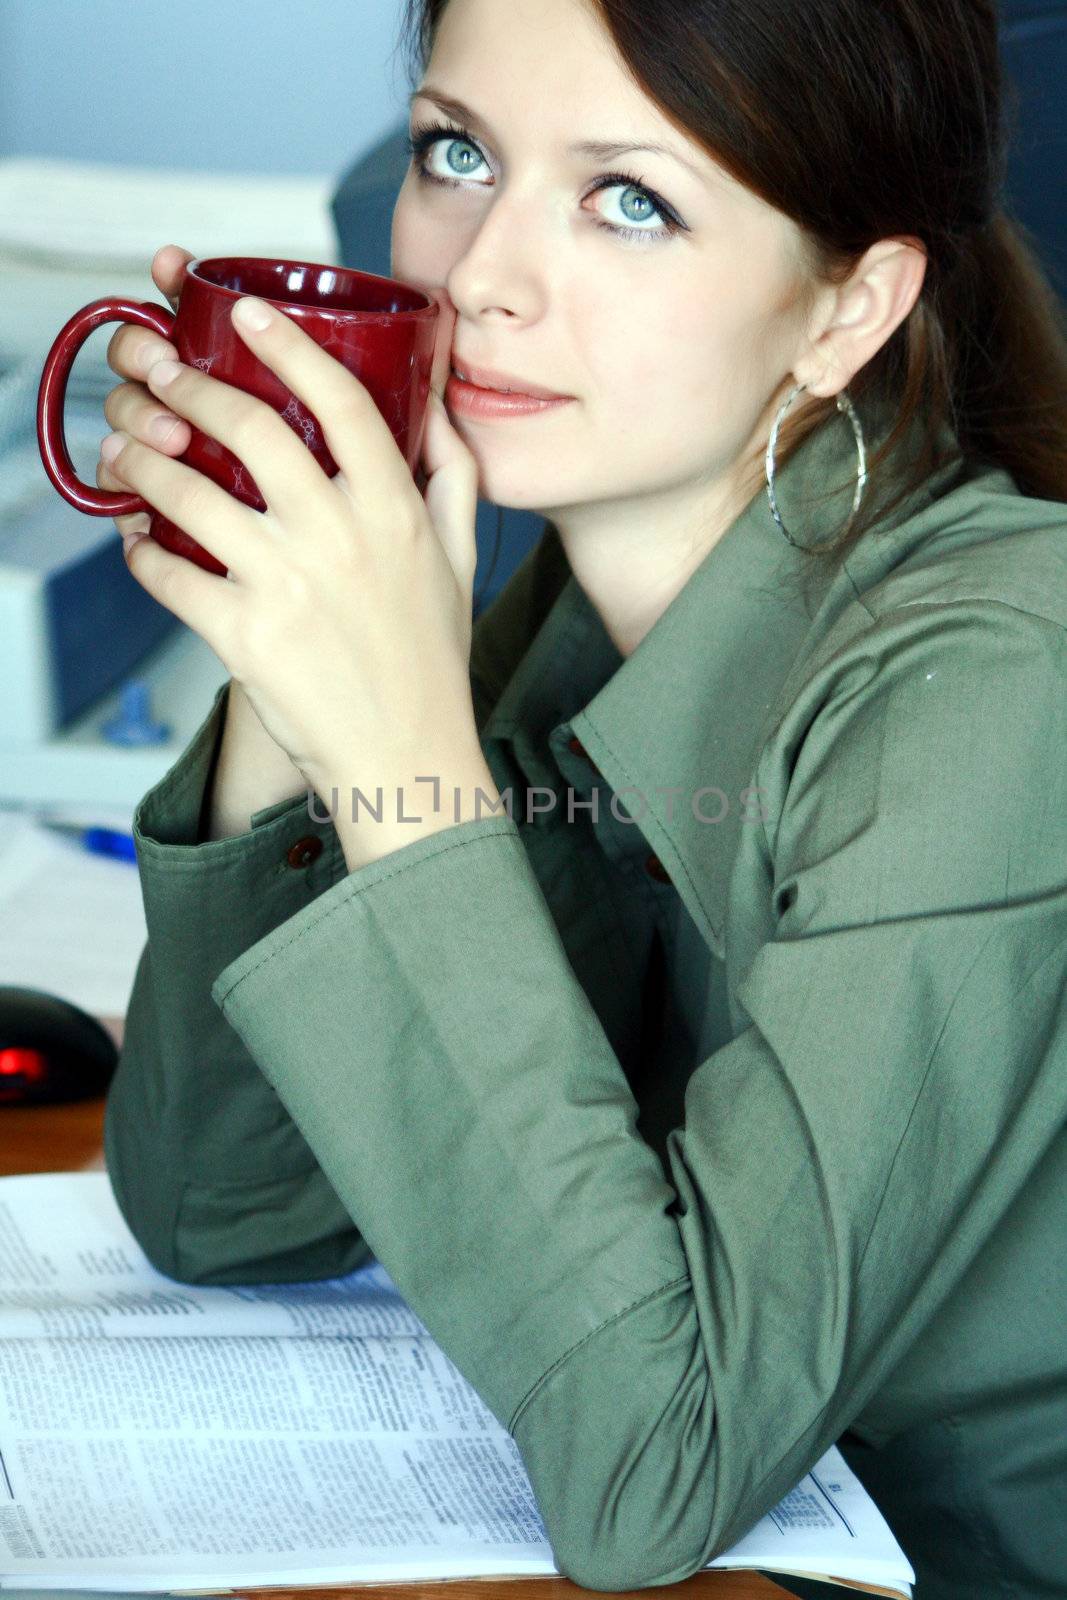 Girl sitting in the office, having coffee break